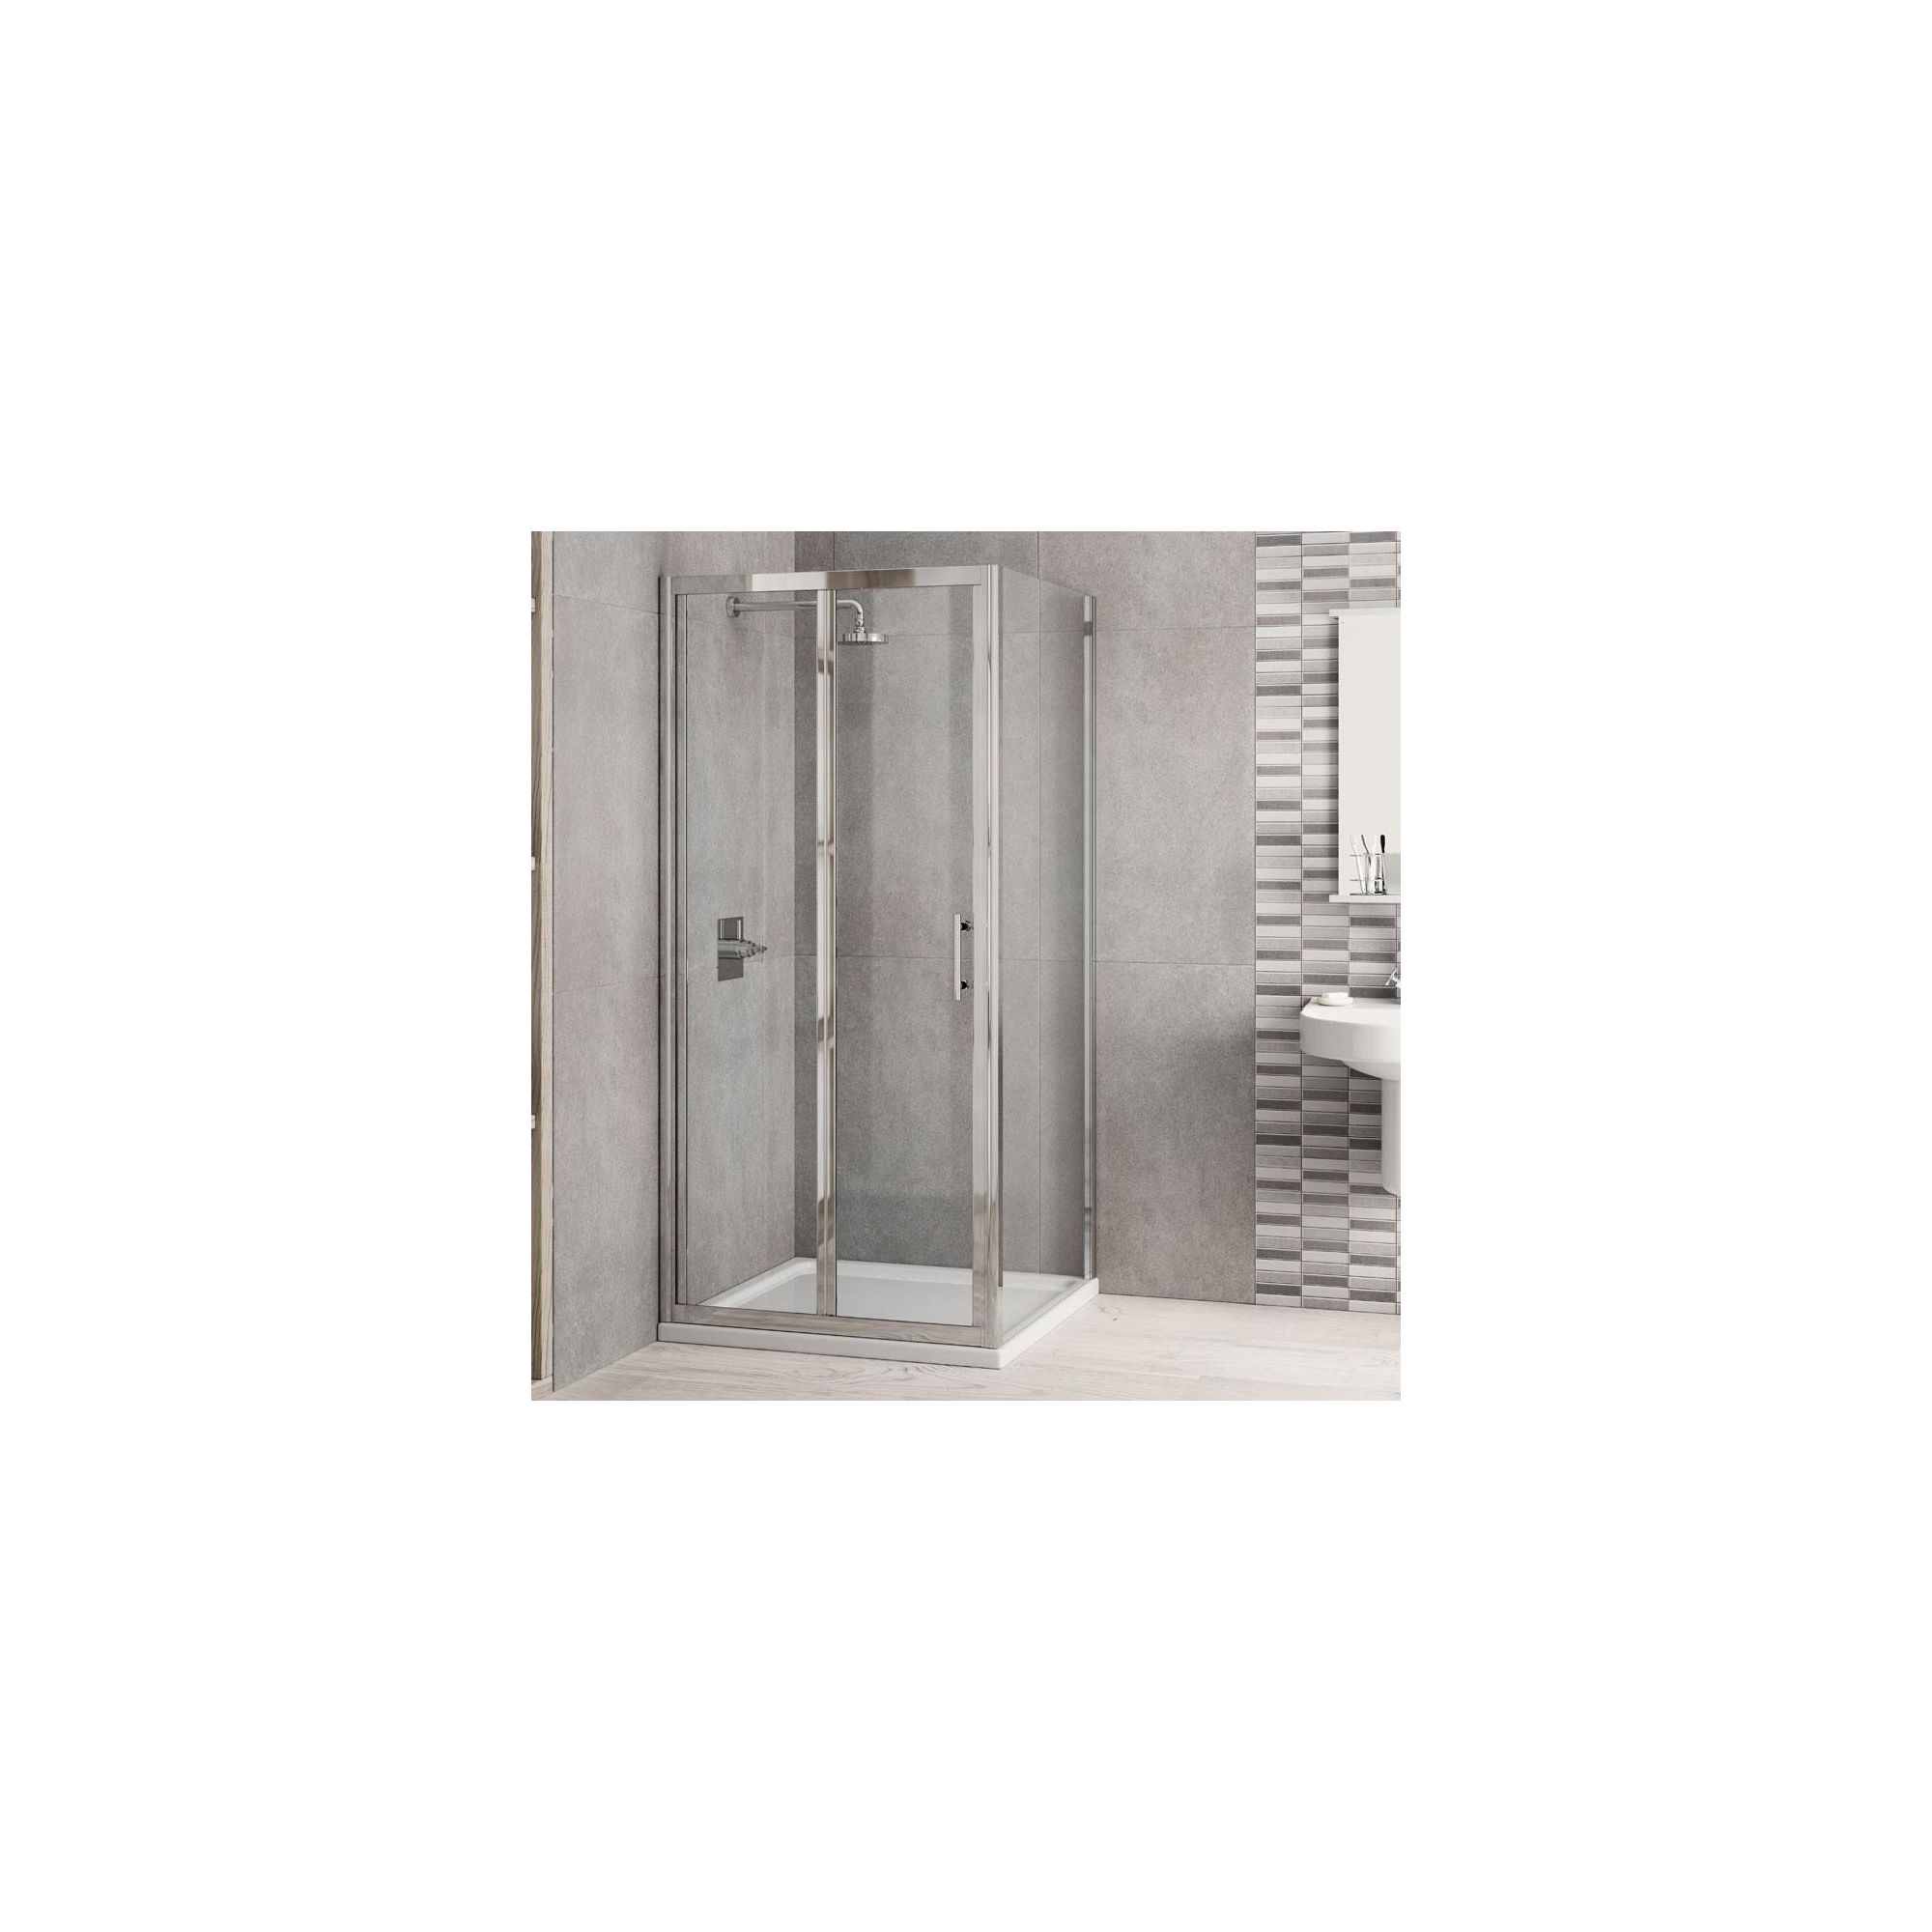 Elemis Inspire Bi-Fold Door Shower Enclosure, 1000mm x 800mm, 6mm Glass, Low Profile Tray at Tesco Direct